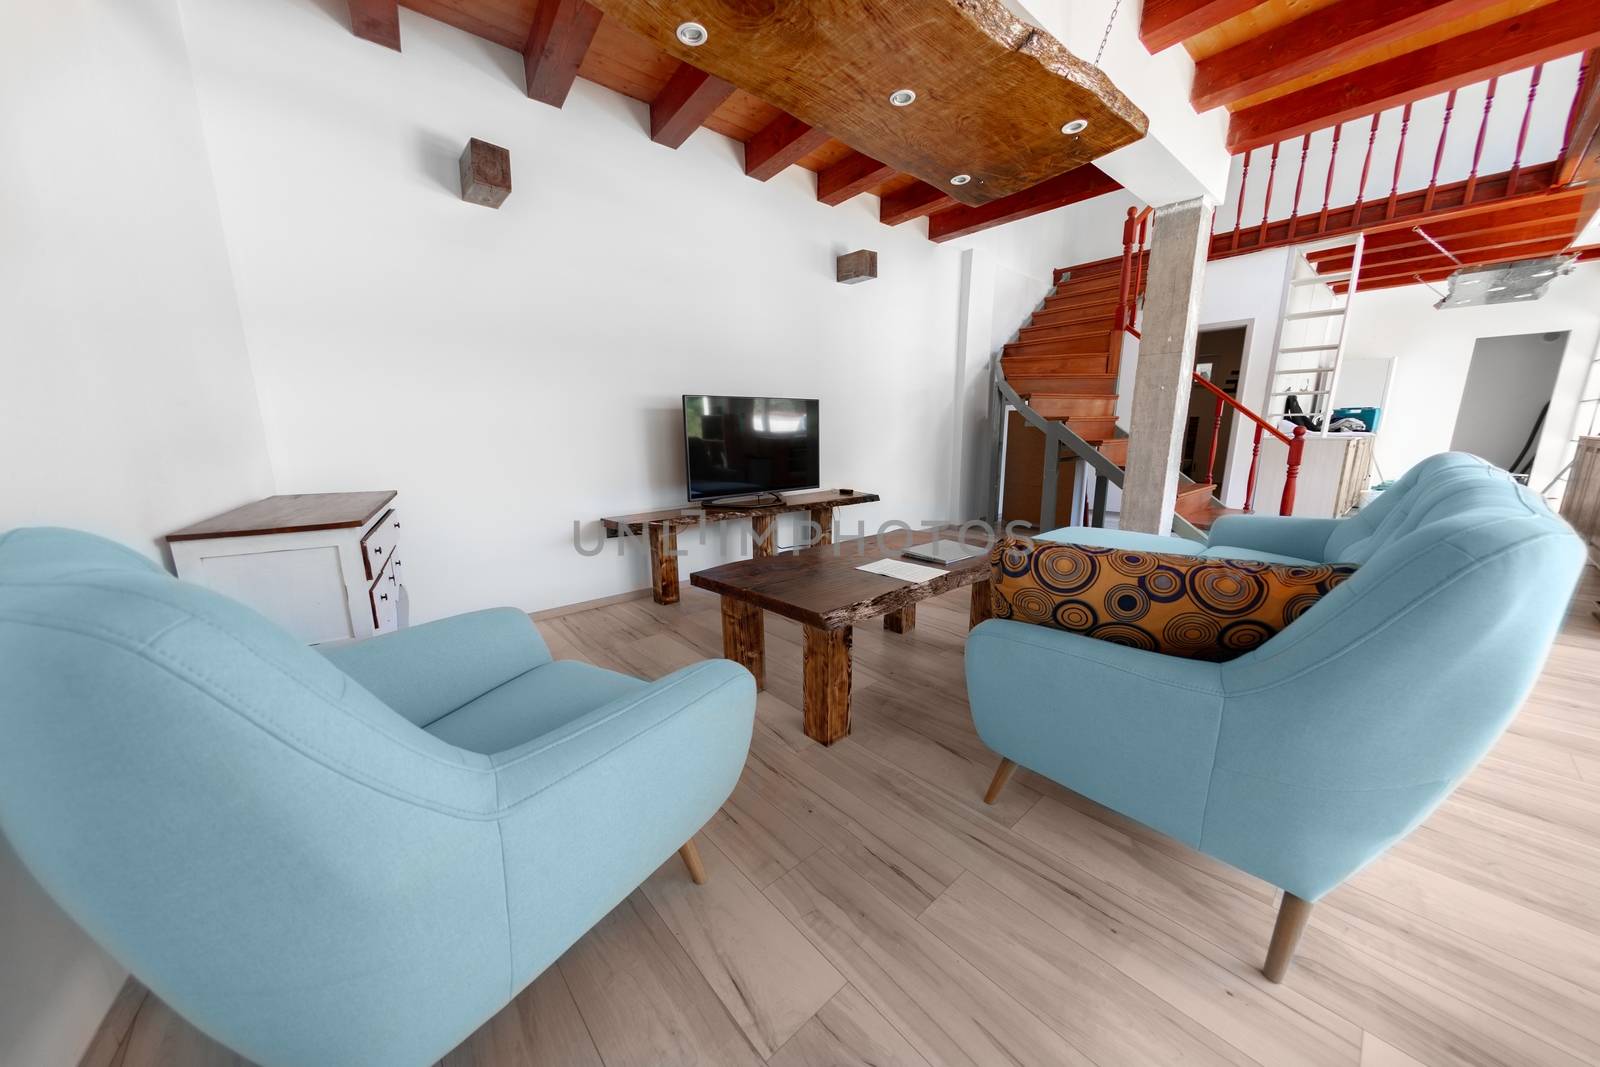 Living room with blue armchair and sofa angle shot